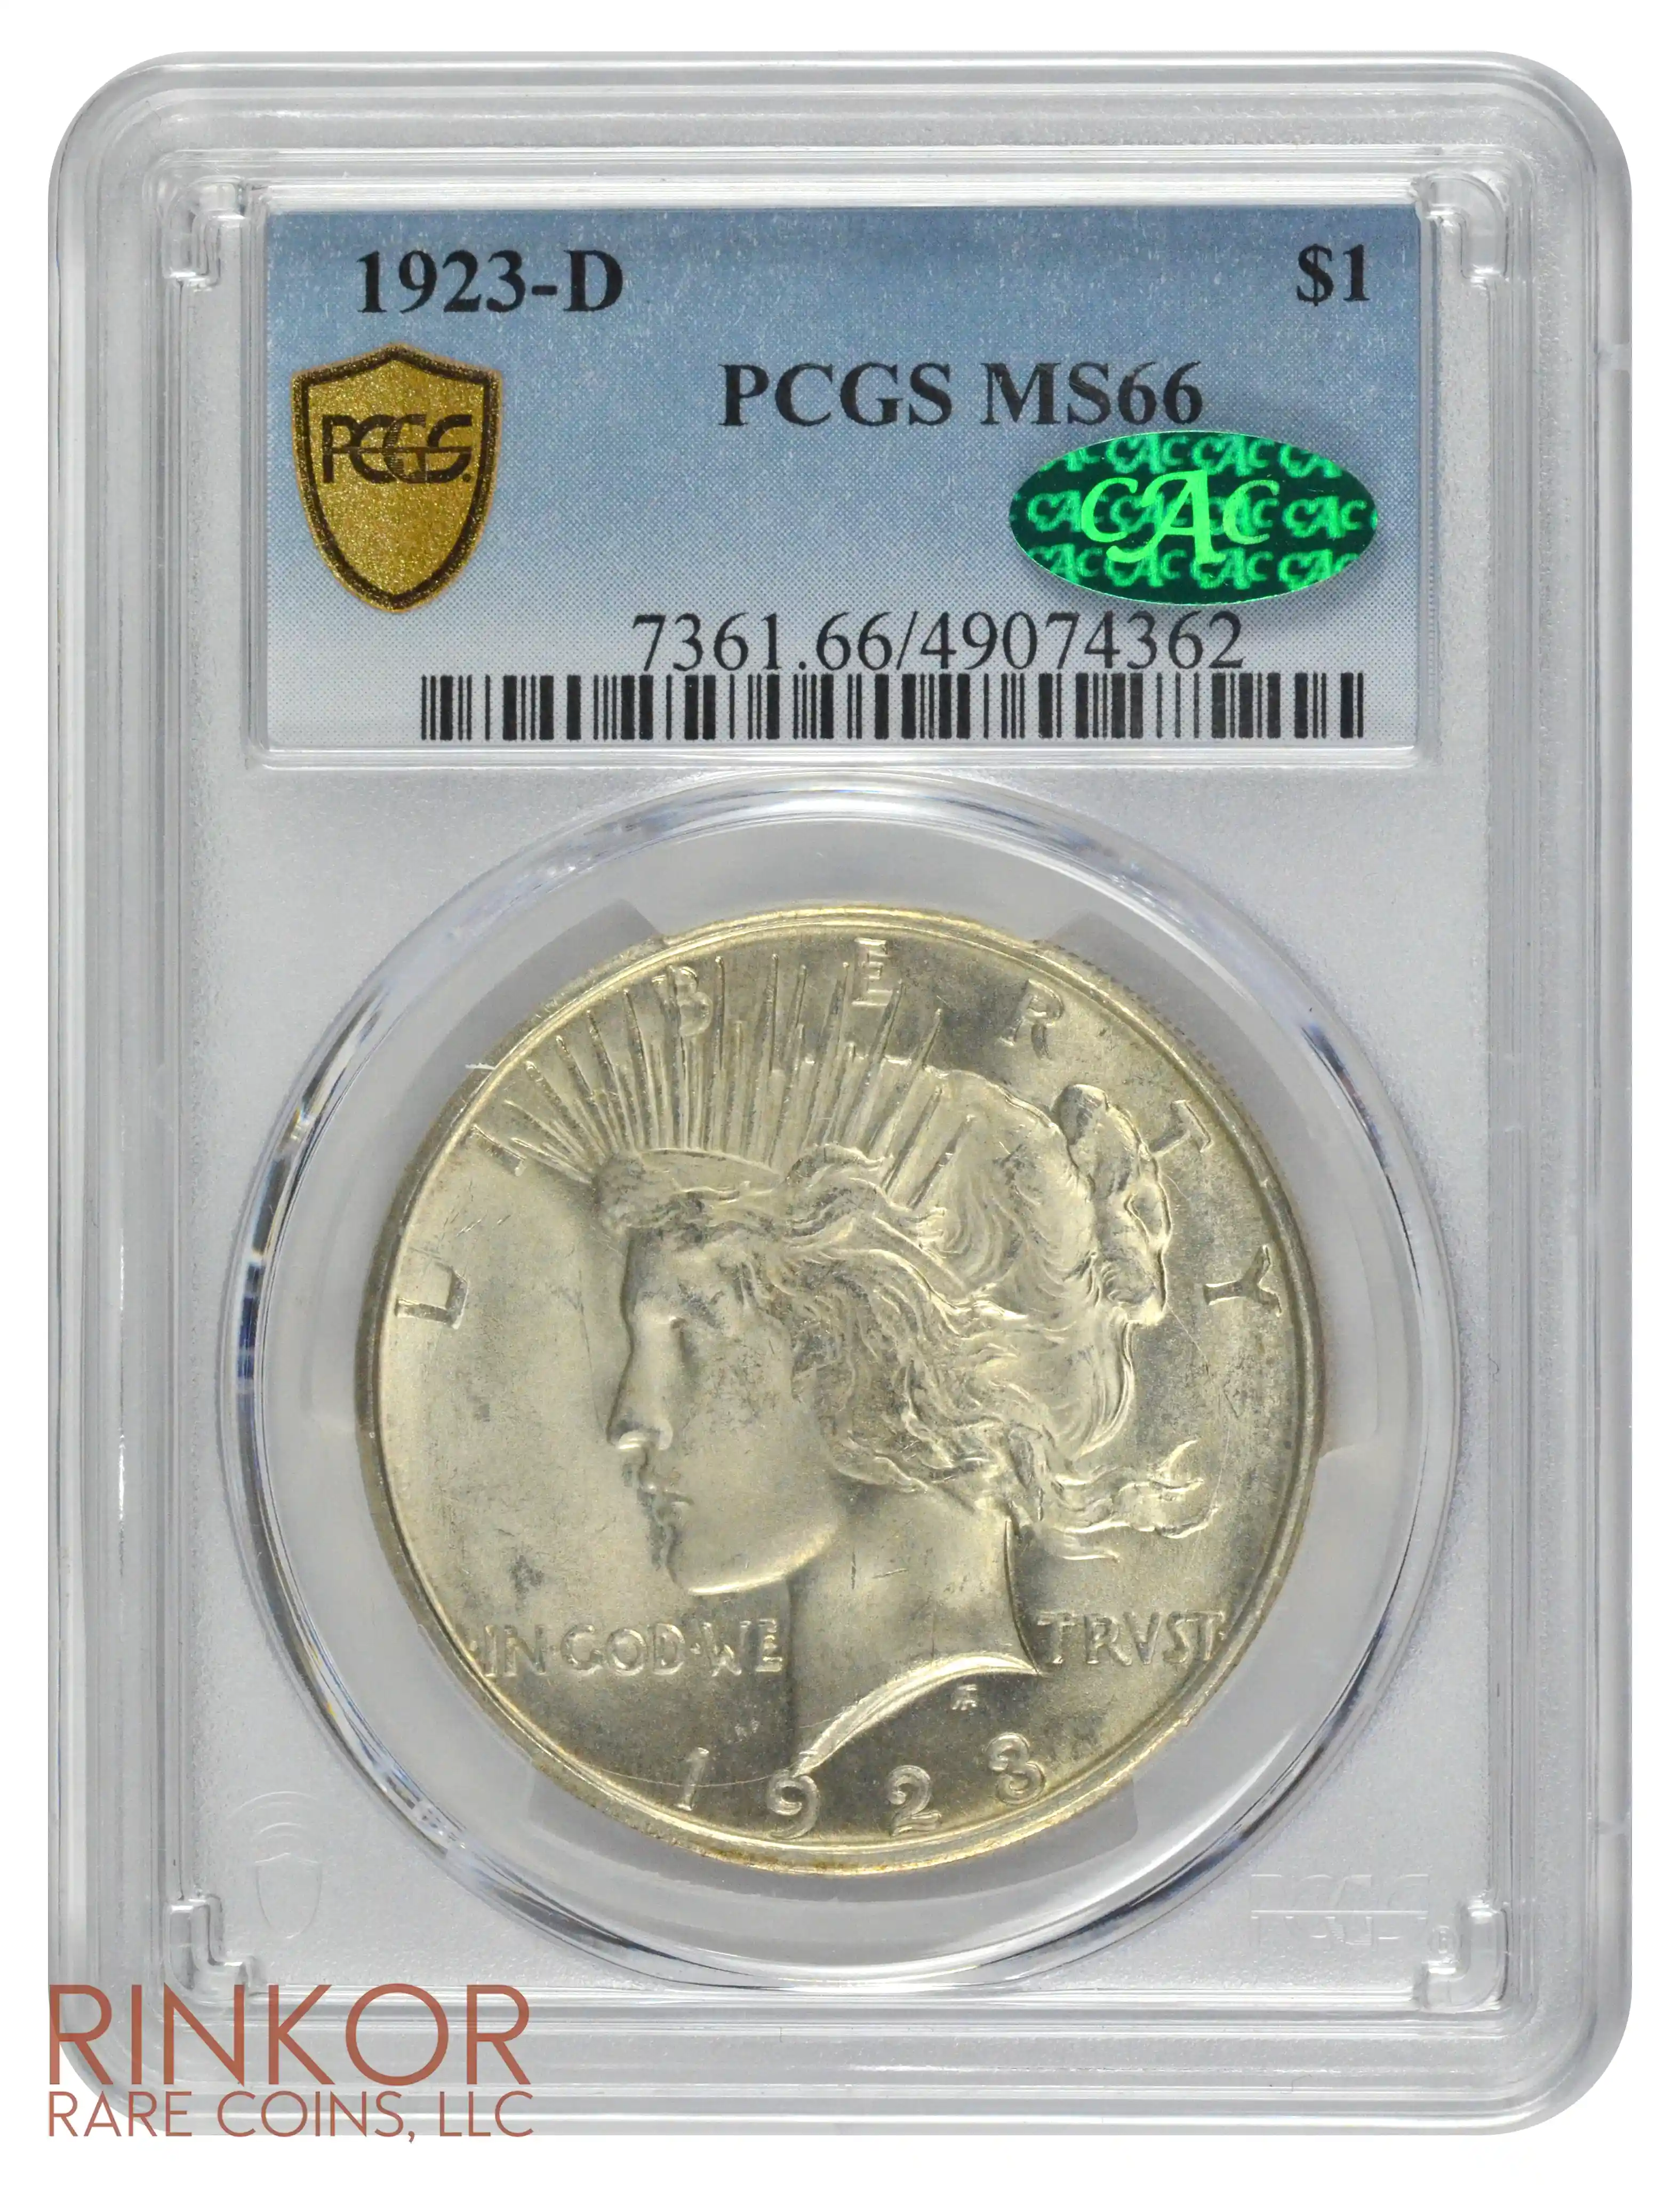 1923-D $1 PCGS MS 66 CAC